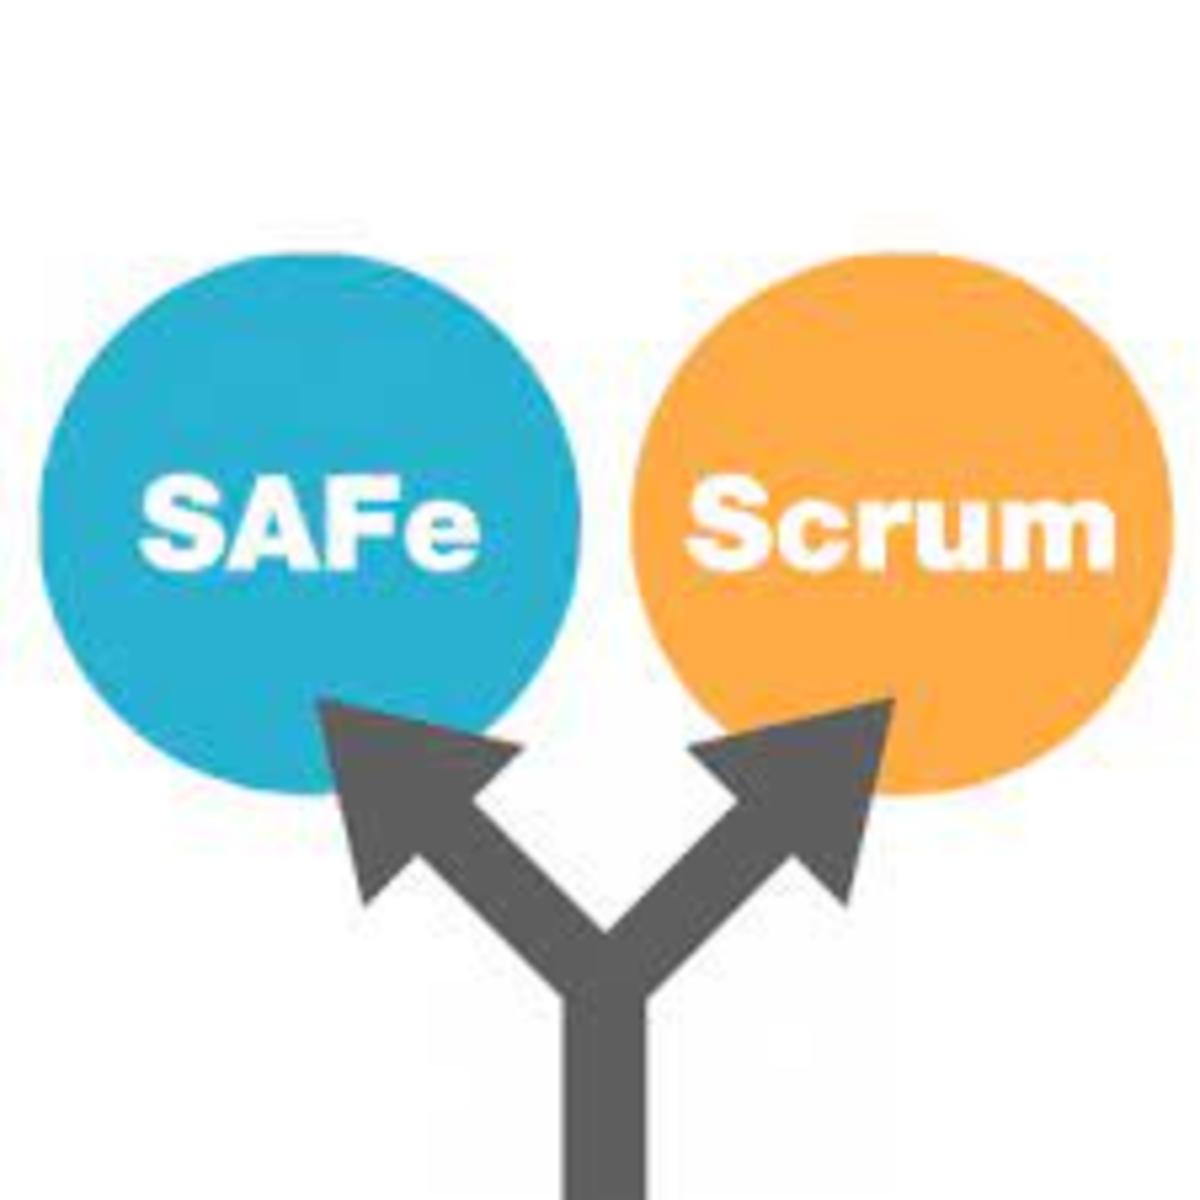 is-scaled-agile-framework-better-than-scrum